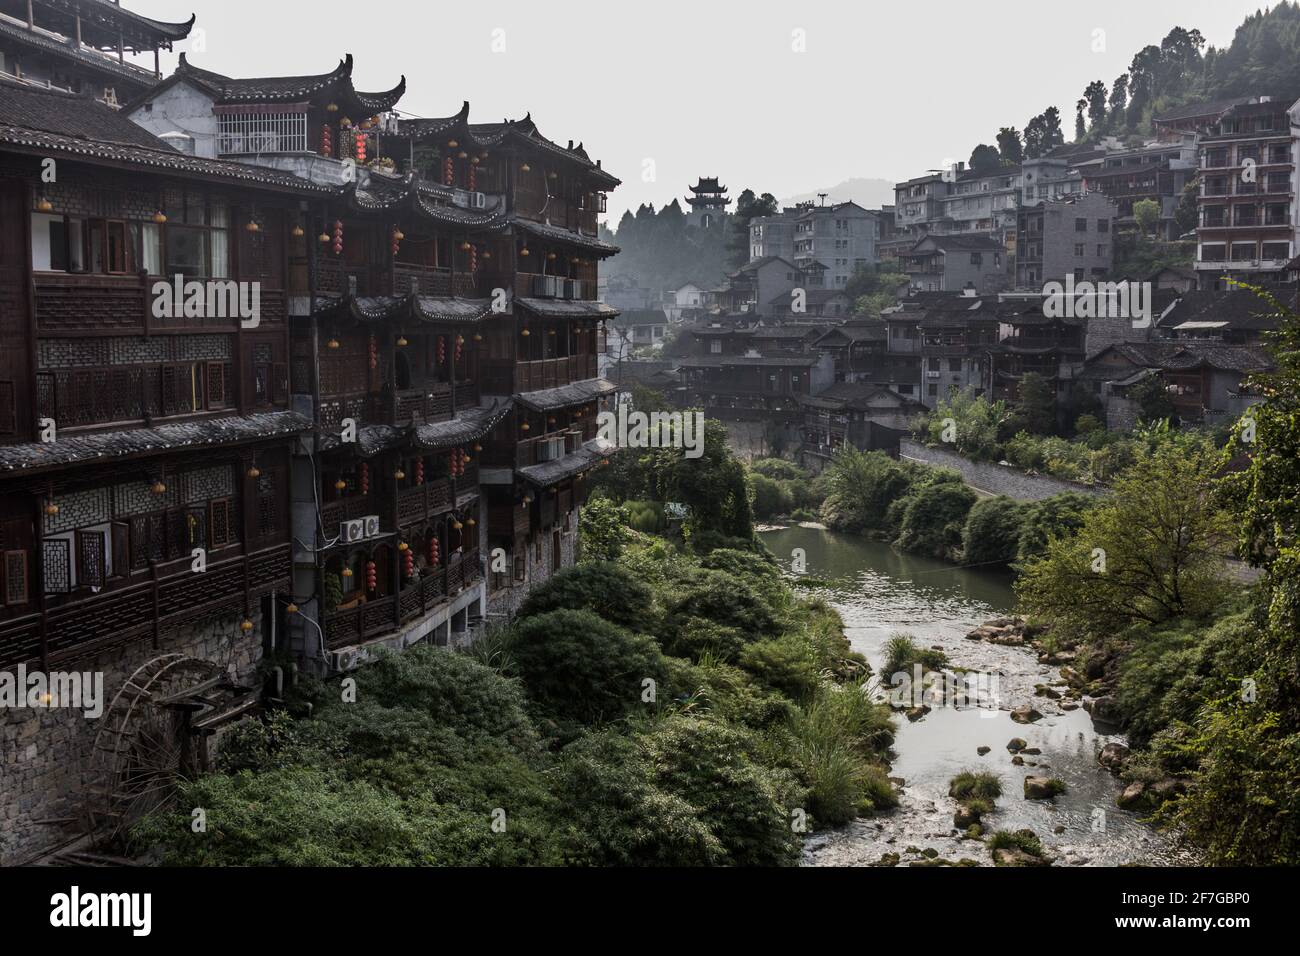 View of Furong Ancient Town (Furong Zhen, Hibiscus Town), China Stock Photo